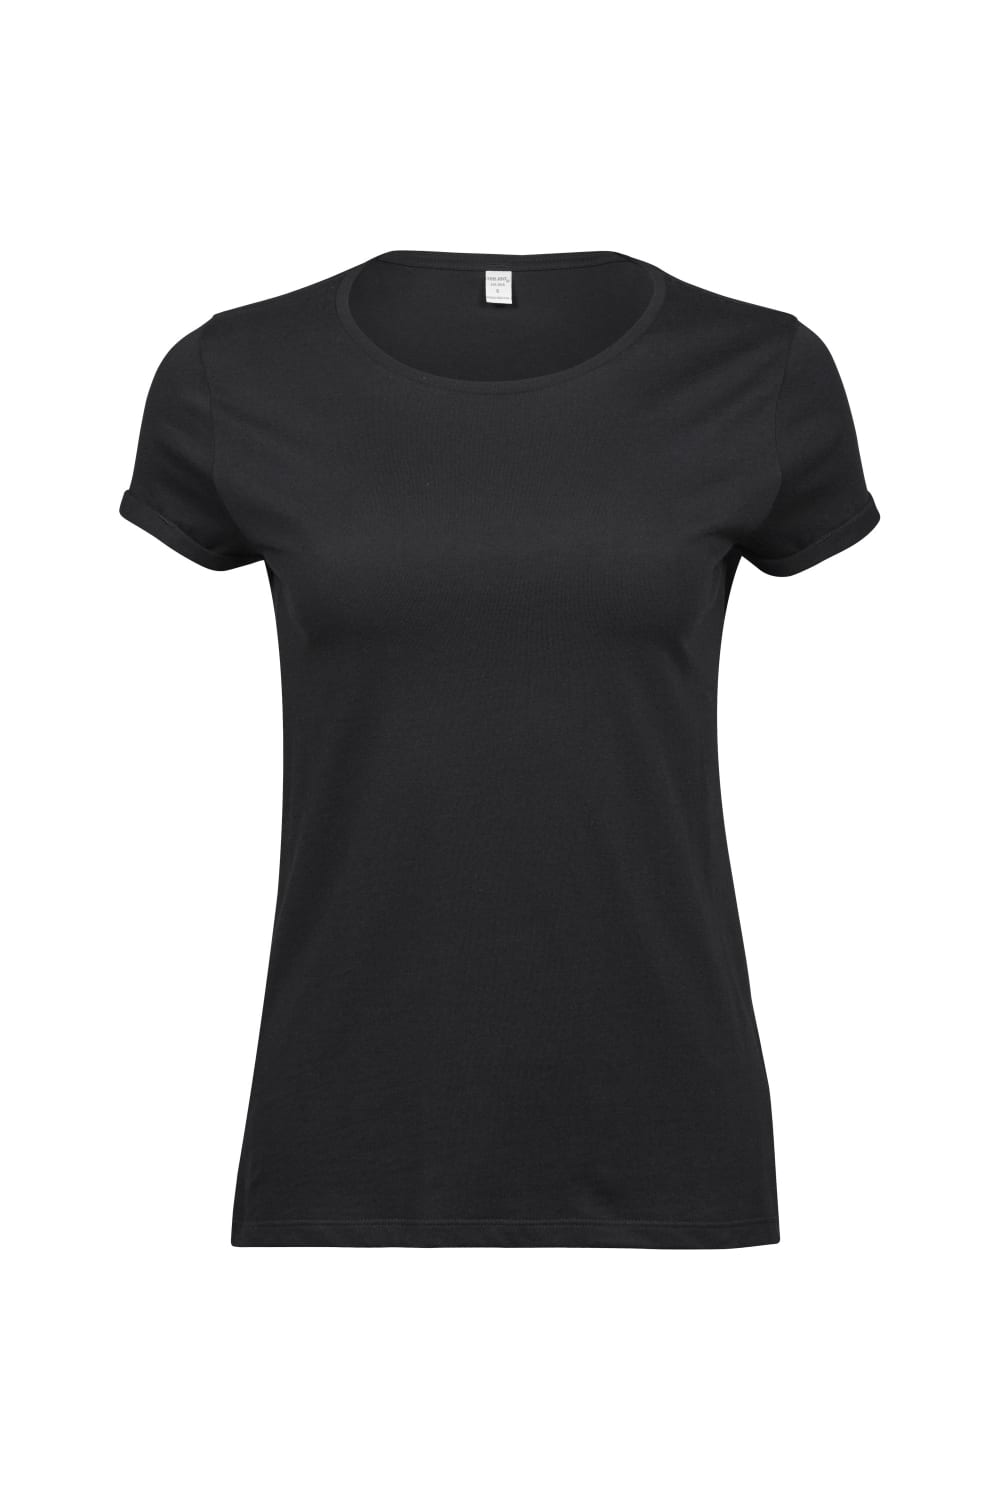 Tee Jays Womens/Ladies Roll-Up T-Shirt (Black)